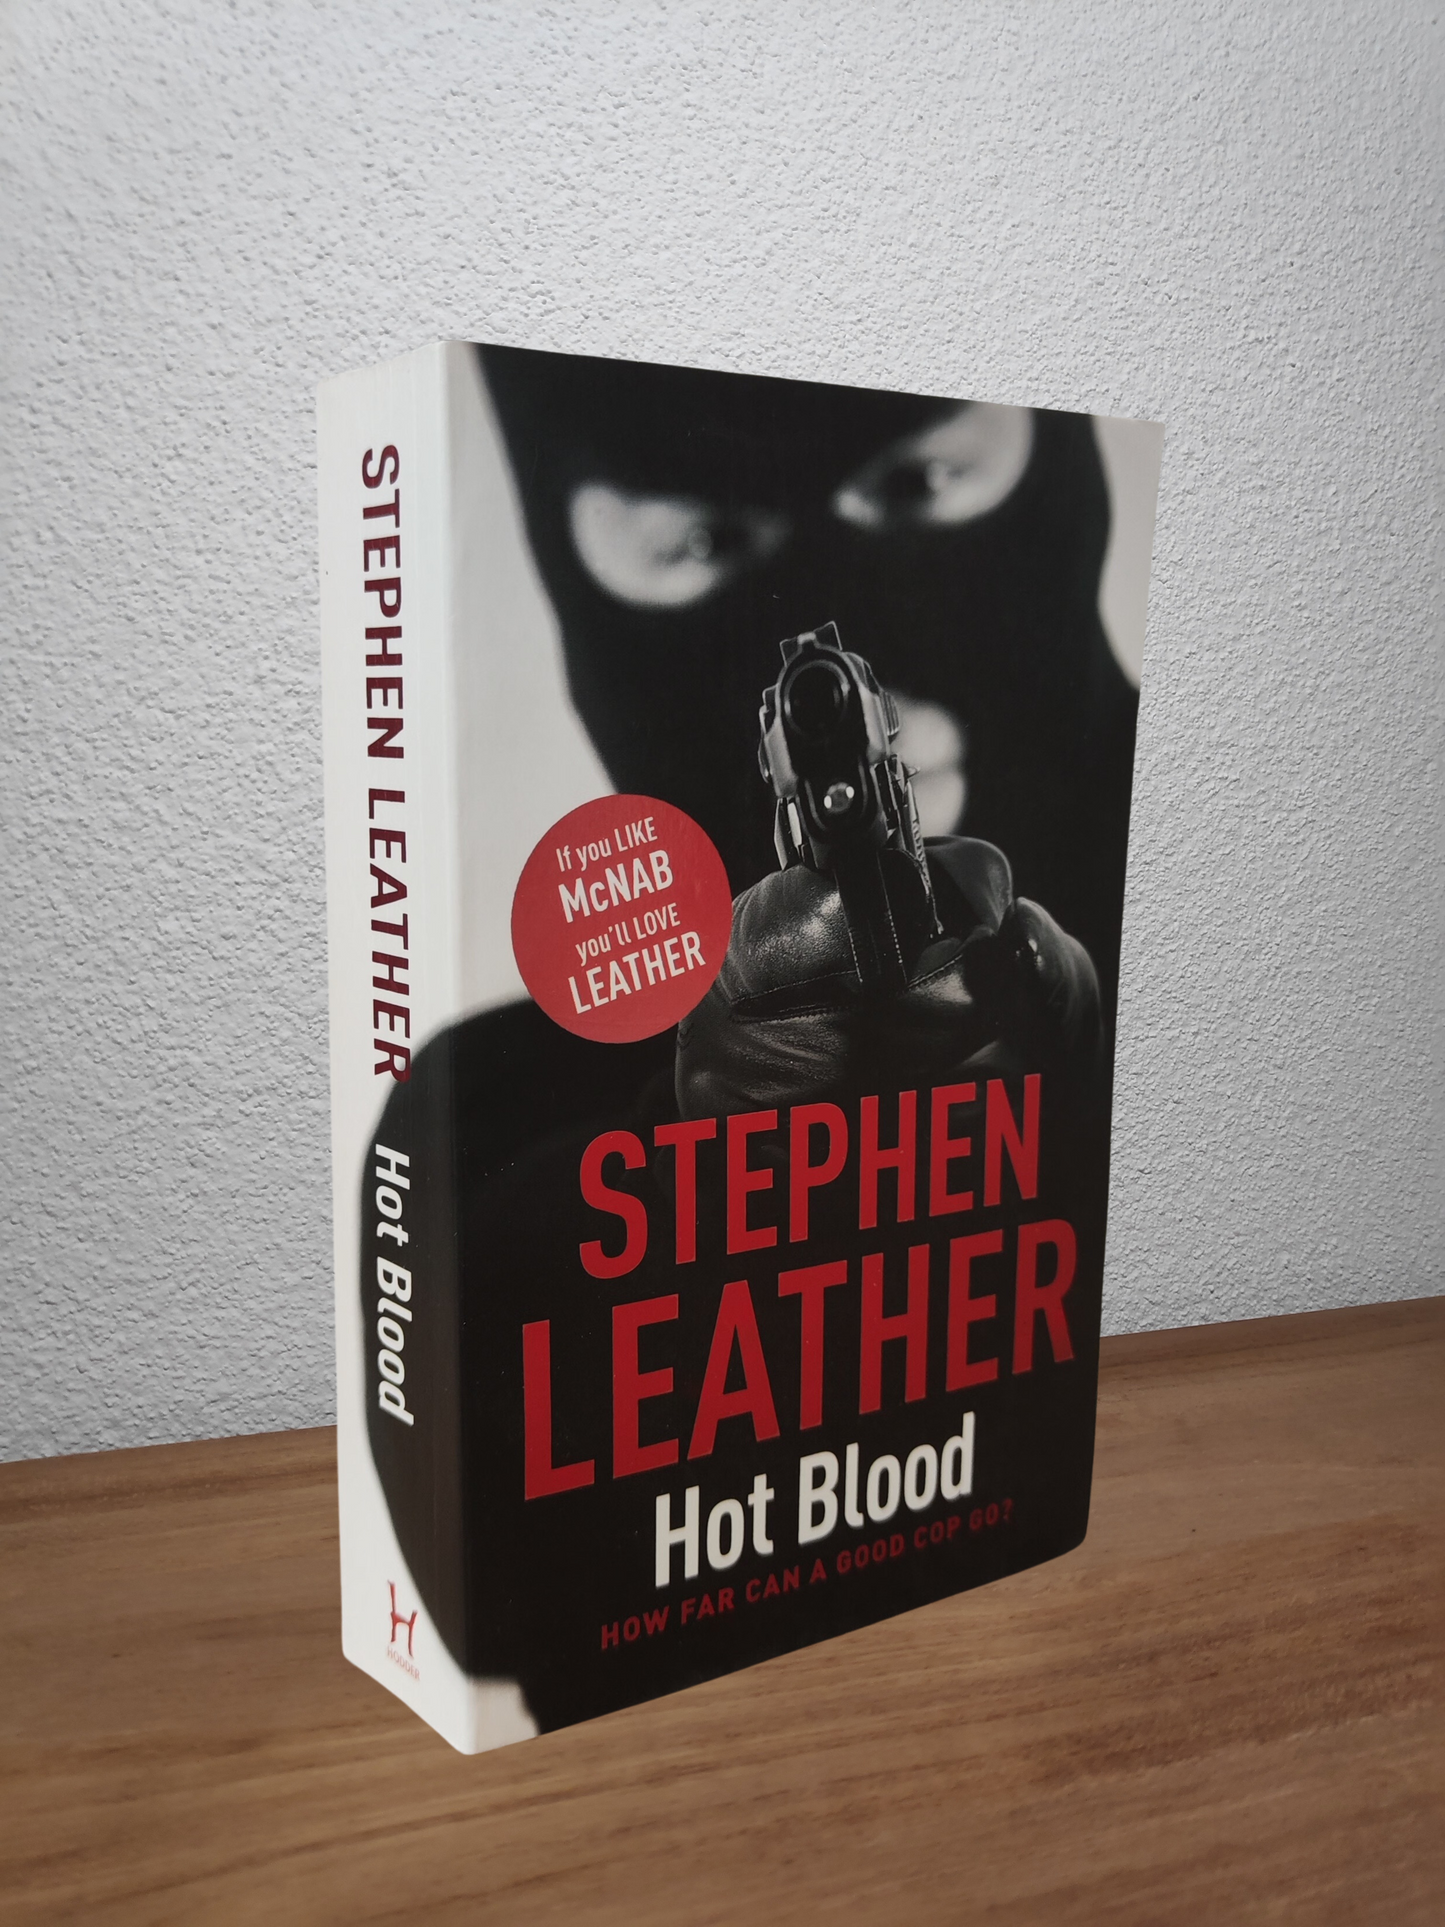 Stephen Leather - Hot Blood (Dan Shepherd #4)